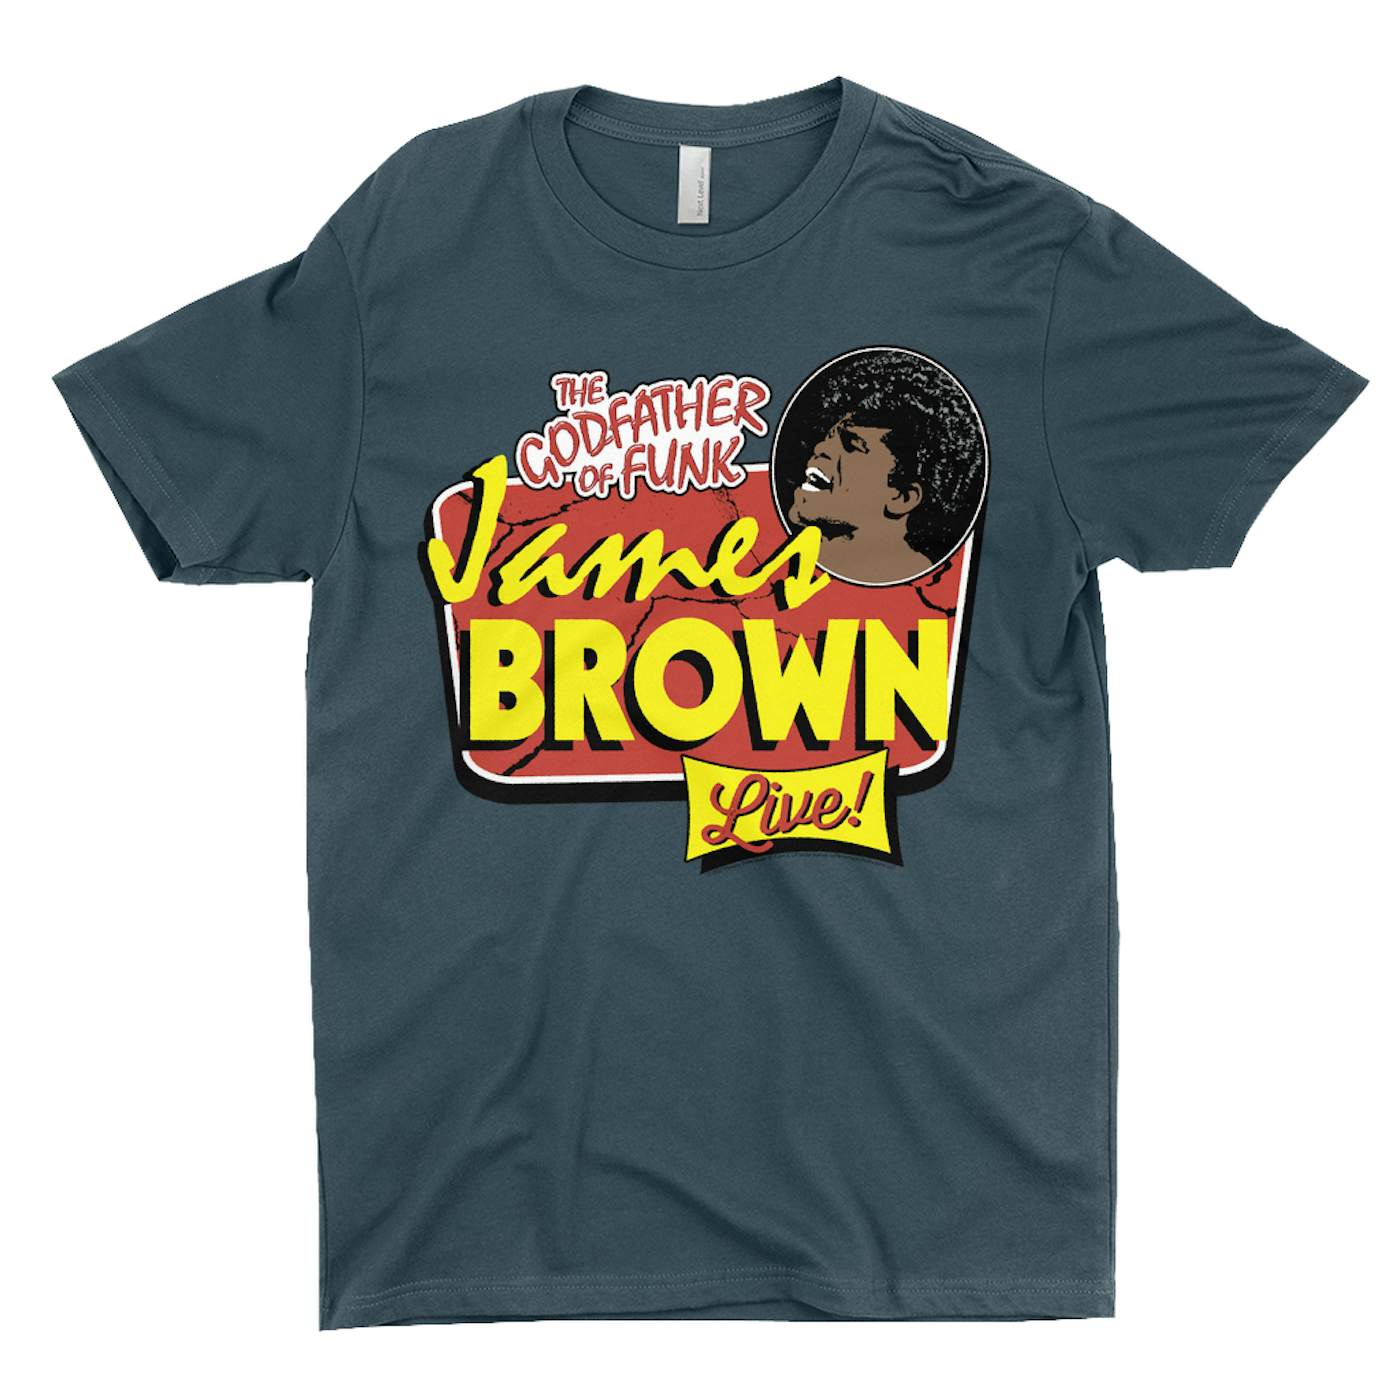 James Brown T-Shirt | Godfather Of Funk, LIVE! James Brown Shirt